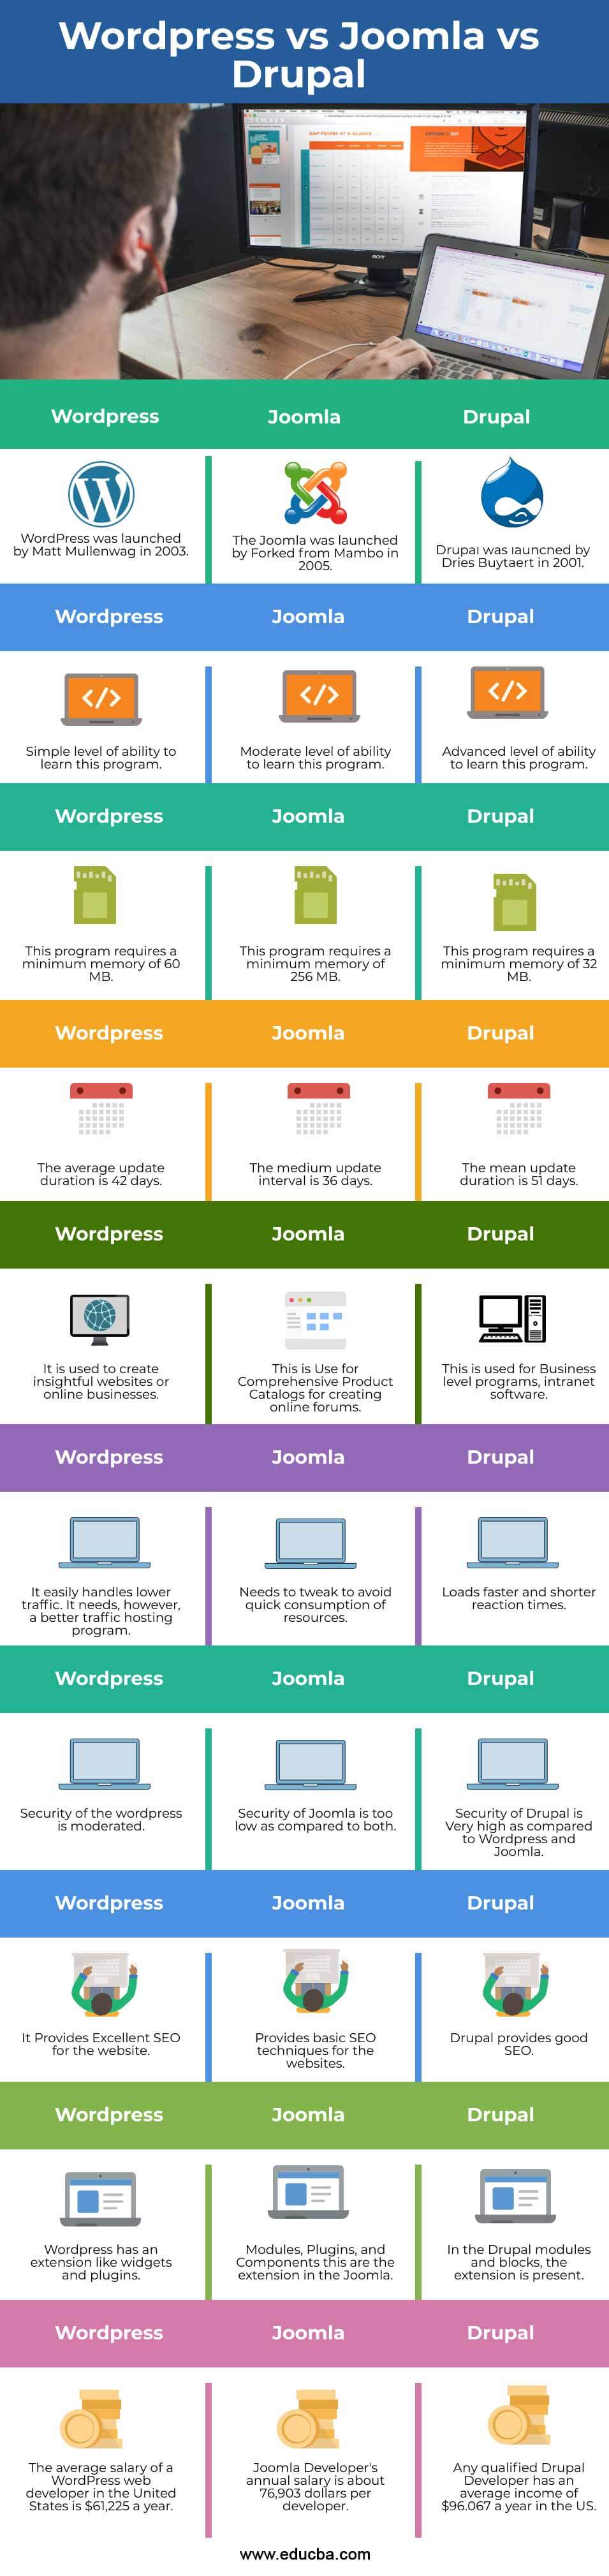 Wordpress-vs-Joomla-vs-Drupal-info